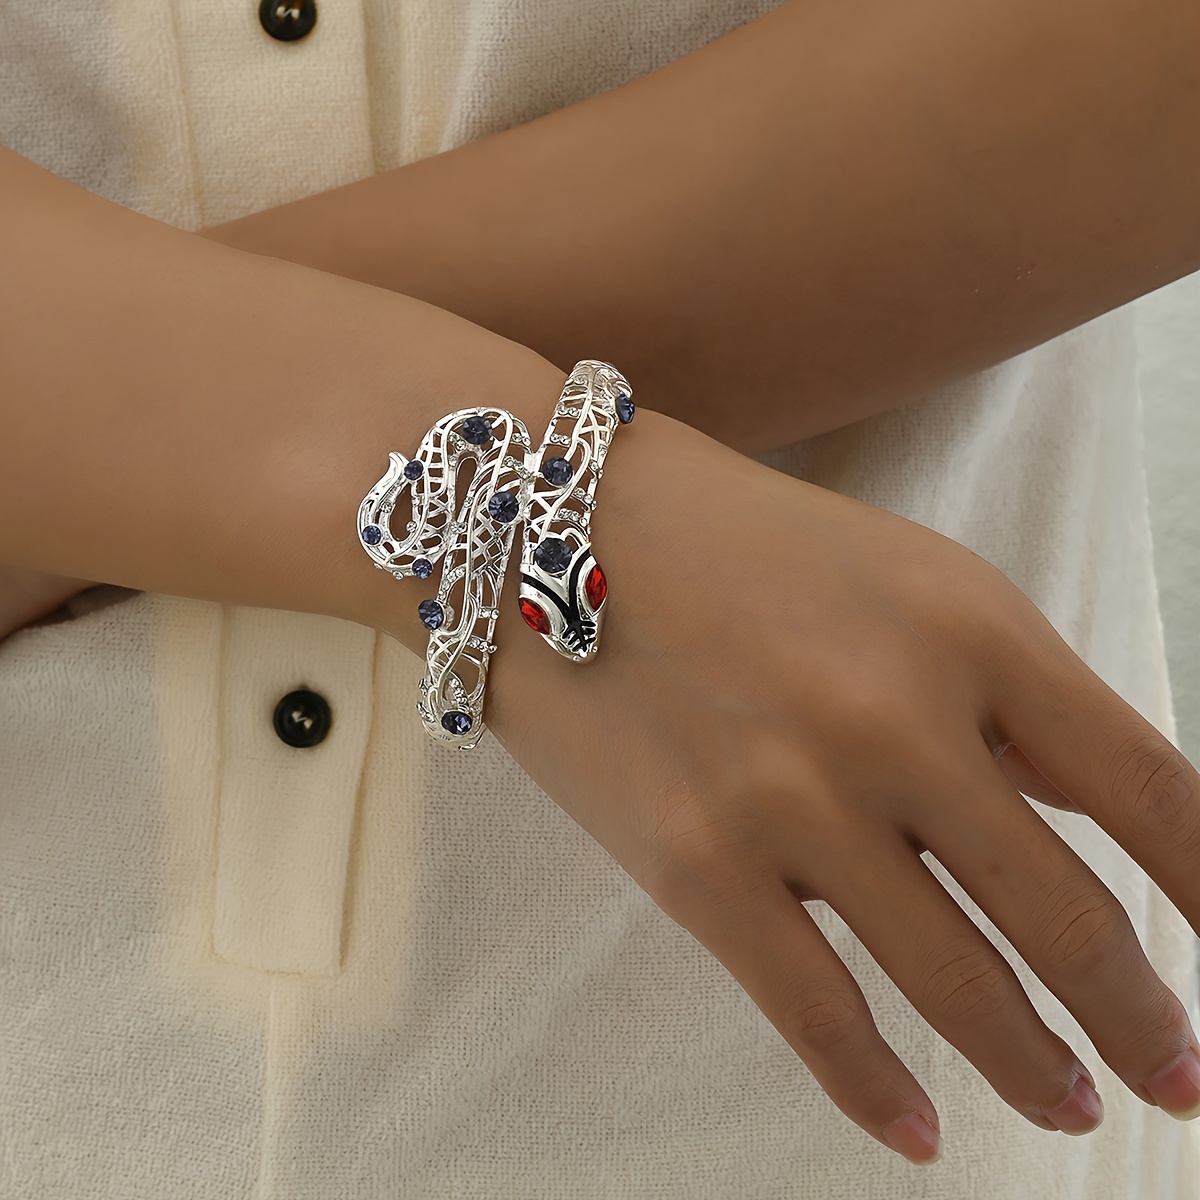 

Luxury Snake Inlaid Rhinestones Bracelet Bangle Animal Design Unique Statement Hand Jewelry Daily Party Wear Jewelry